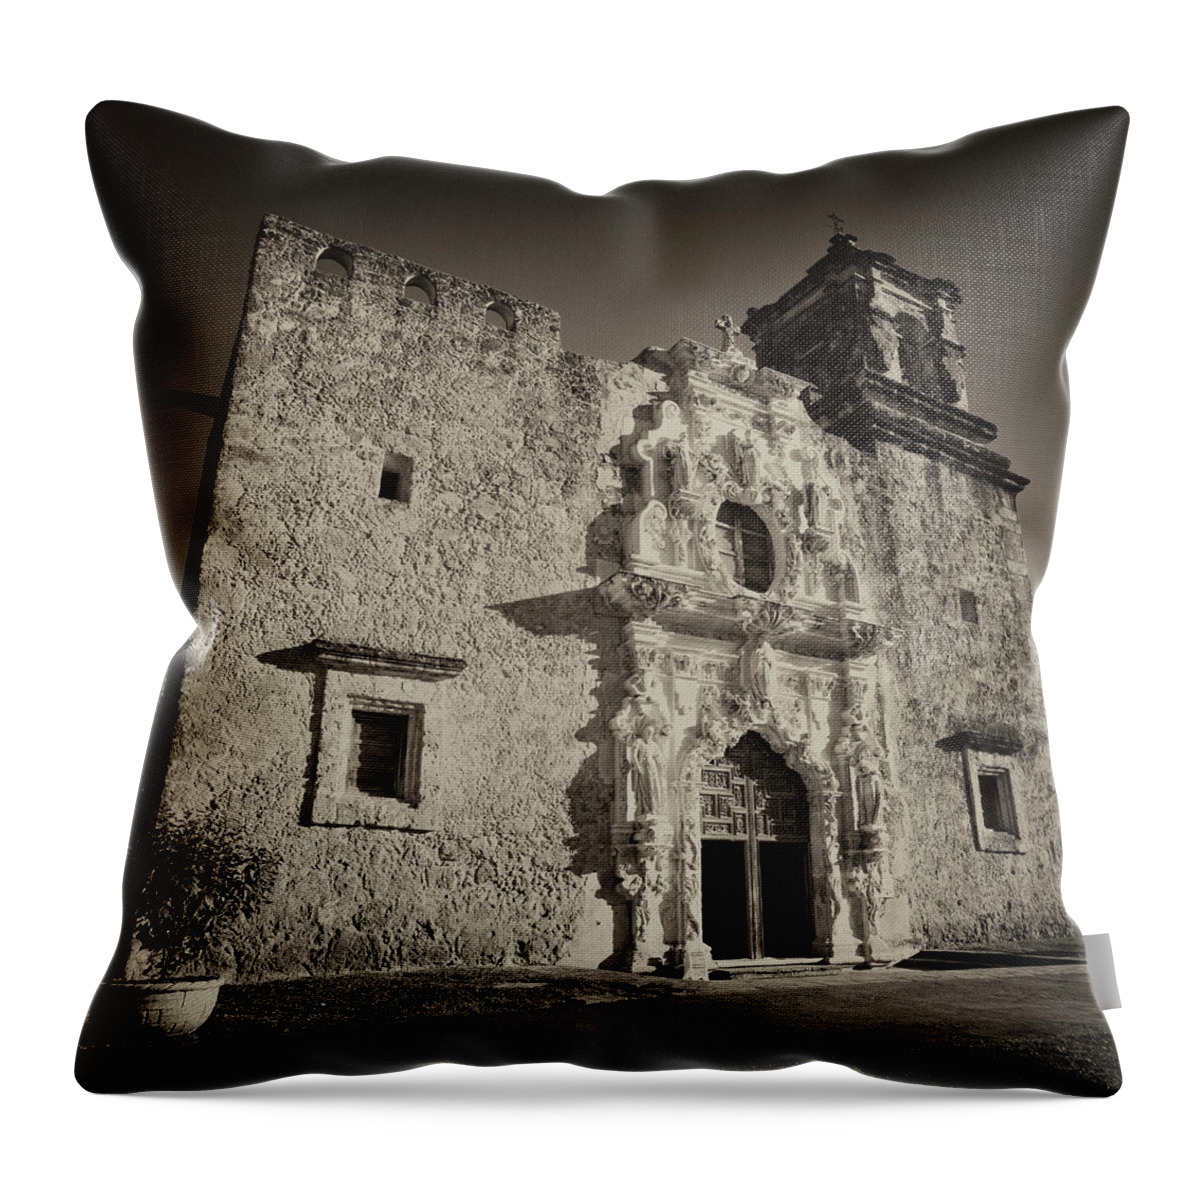 Texas Throw Pillow featuring the photograph San Jose Mission - San Antonio by Stephen Stookey